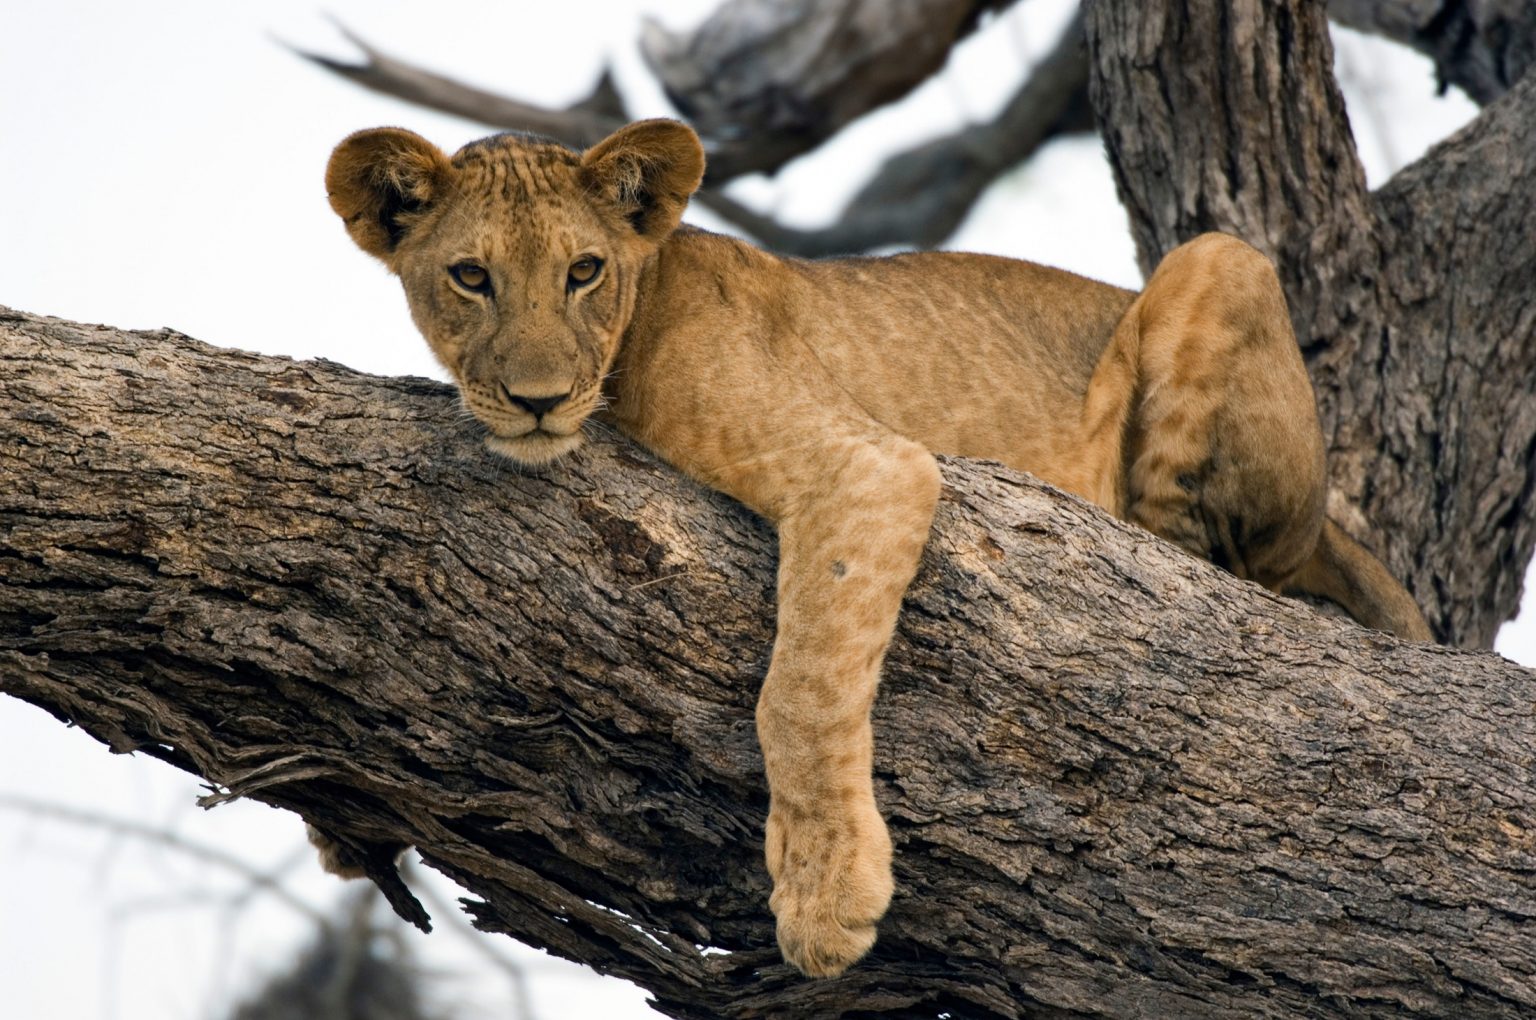 Selous lion climb the tree